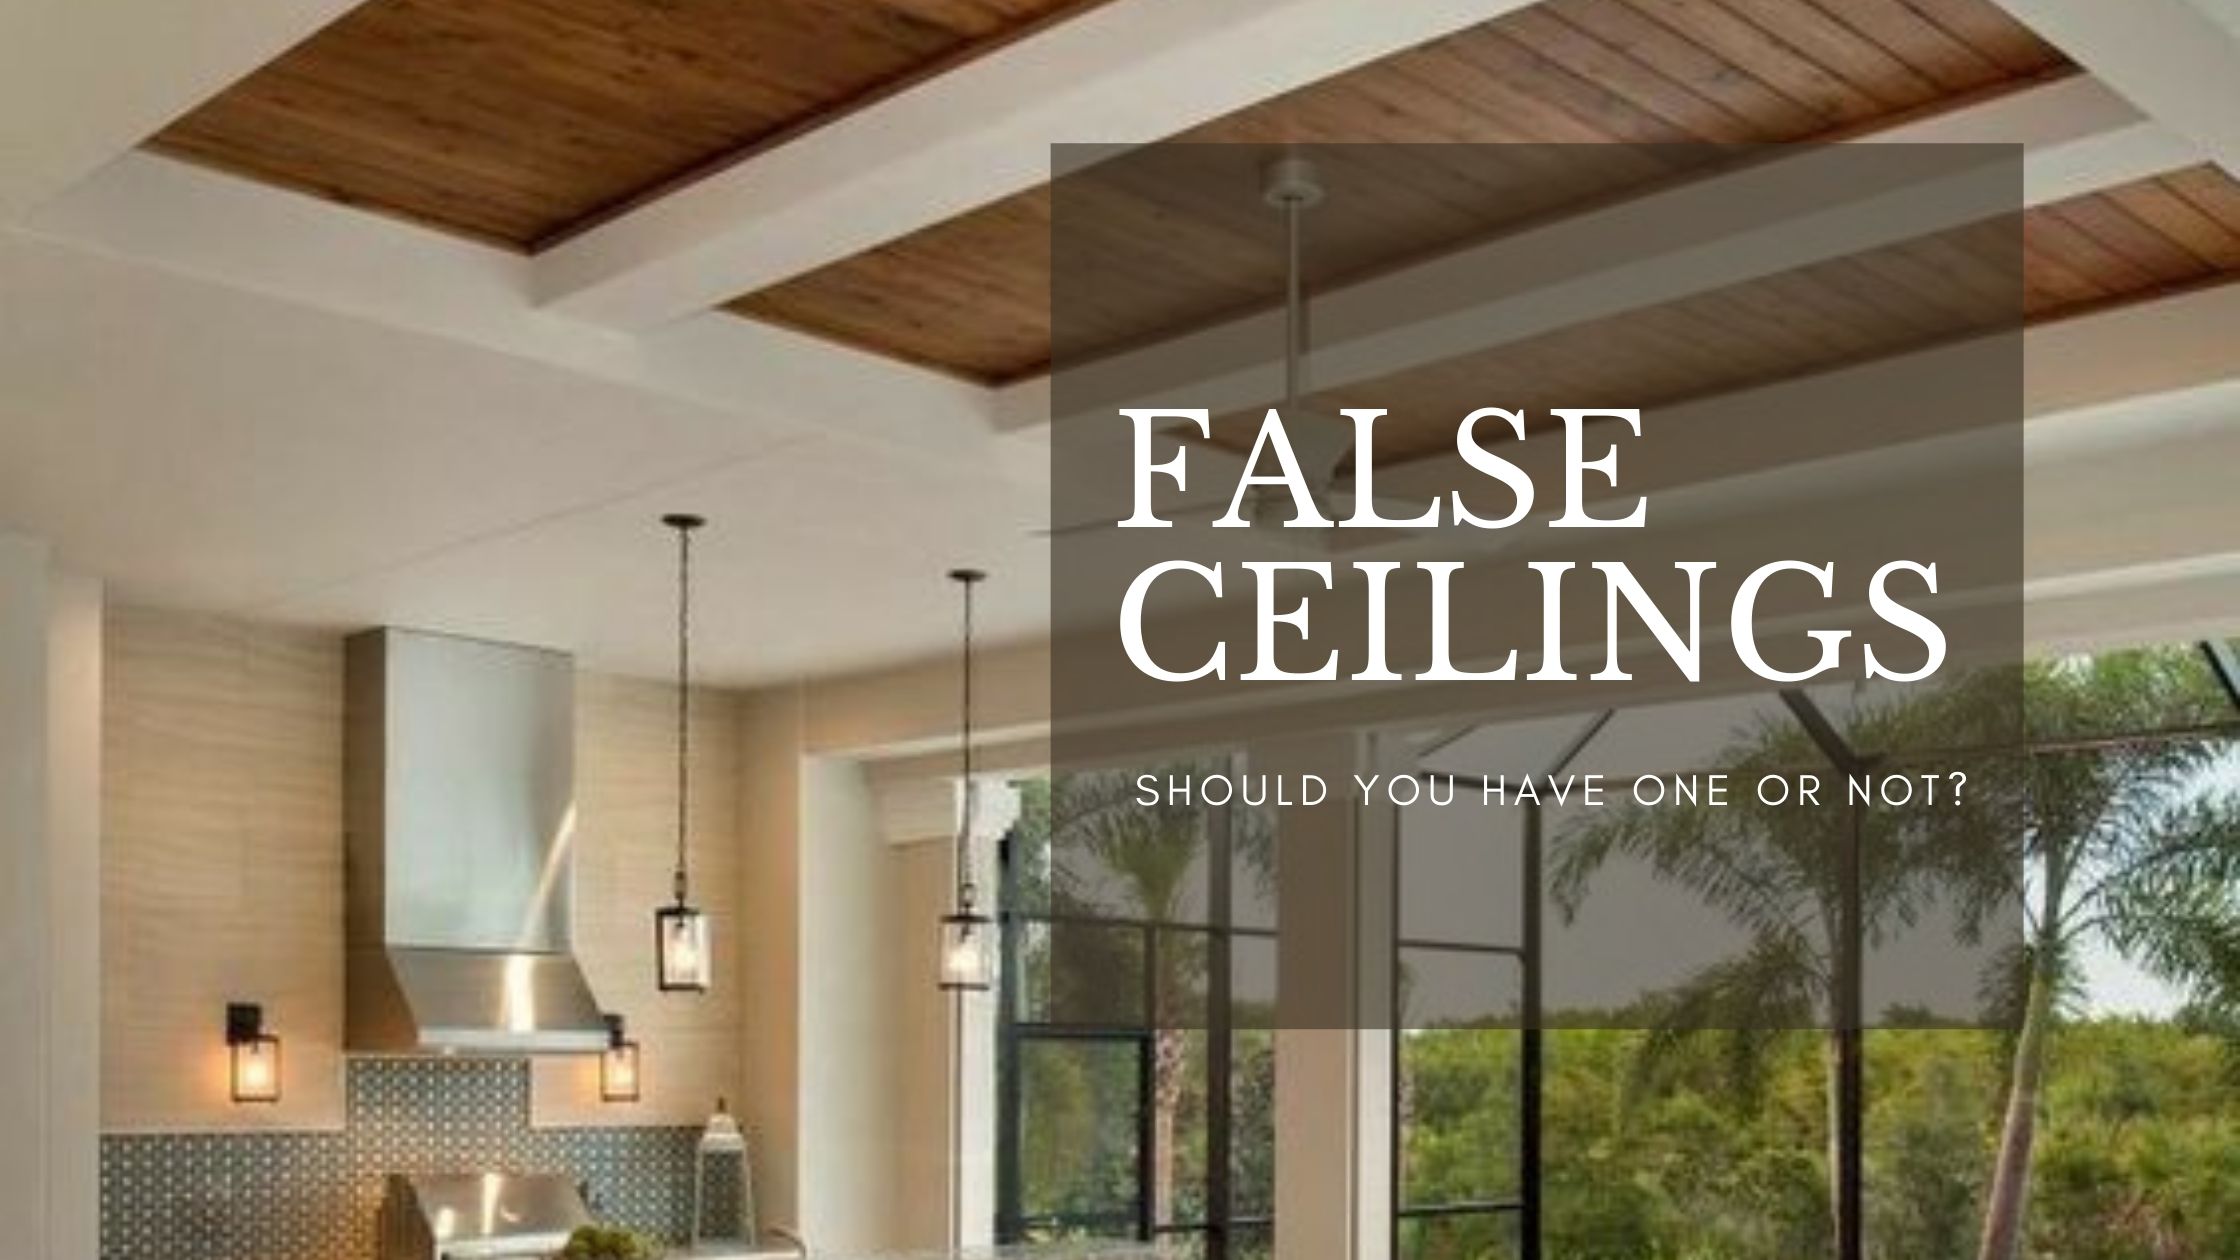 False Ceiling Should You Install It